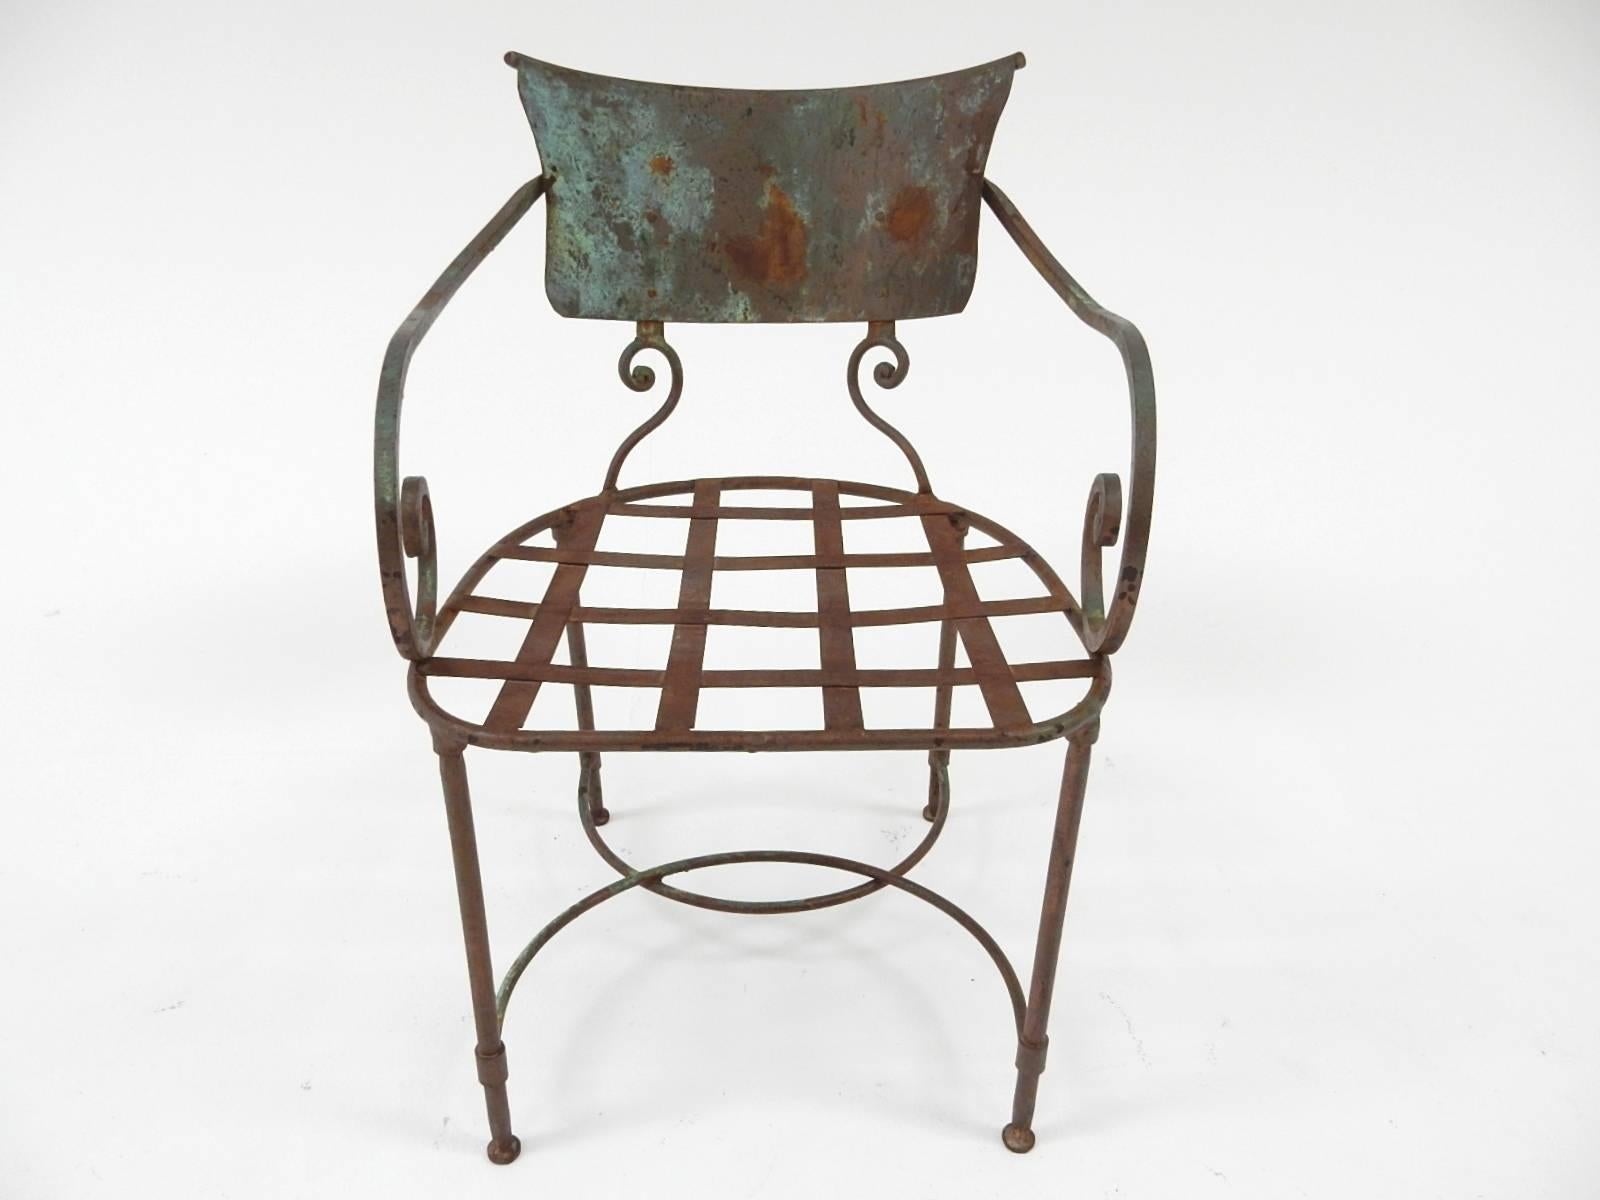 20th Century French Art Nouveau Sculptural Iron Garden Patio Chairs